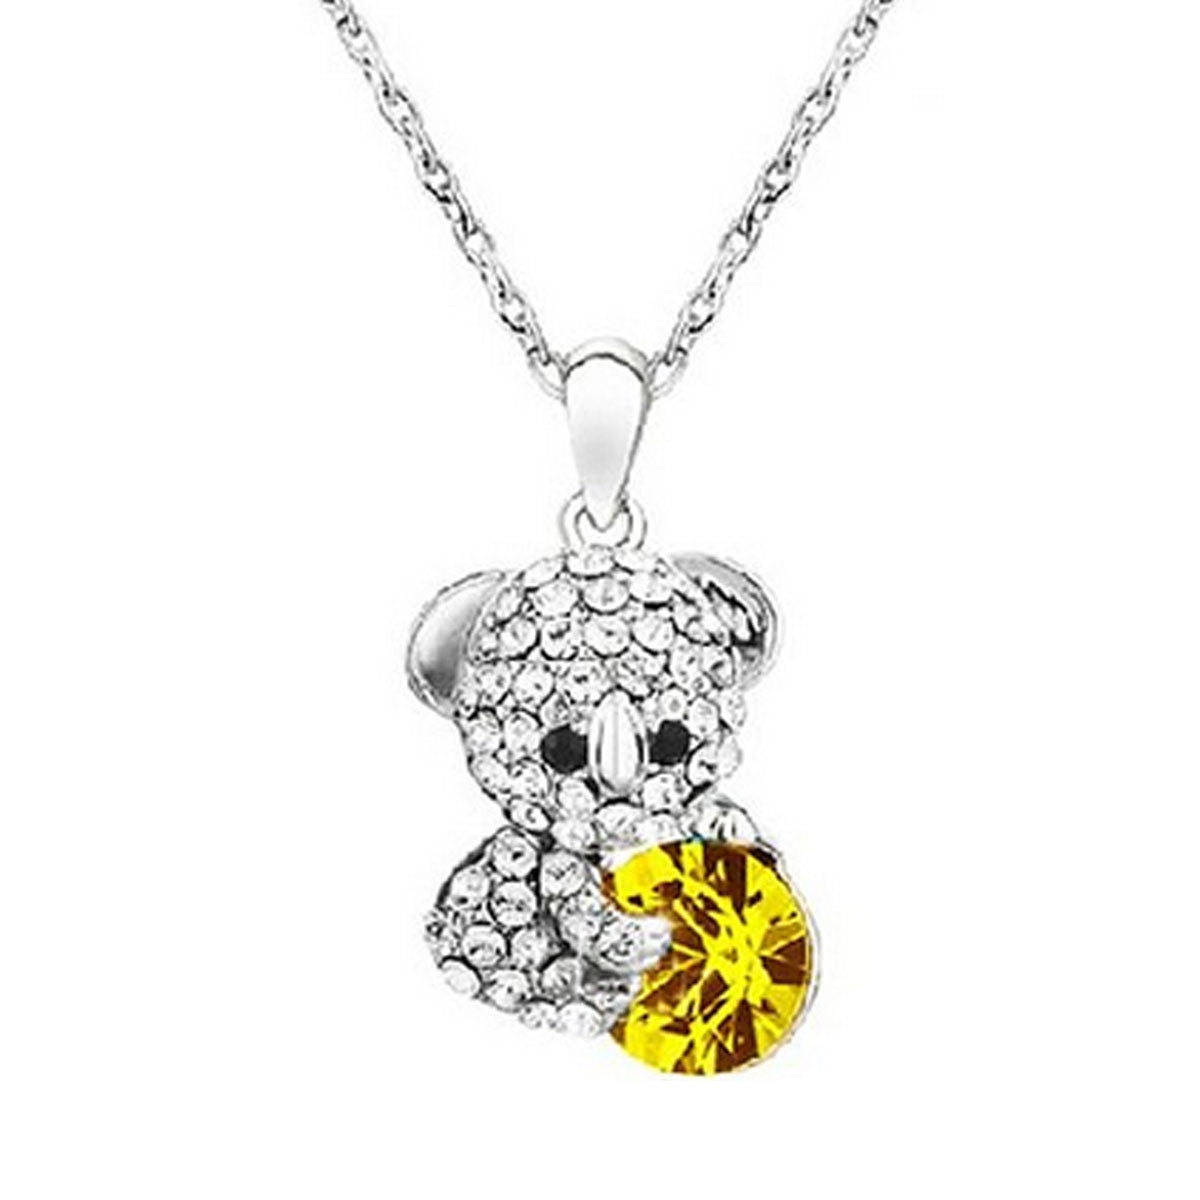 Wrapables Cute Teddy Bear Crystal Pendant Necklace